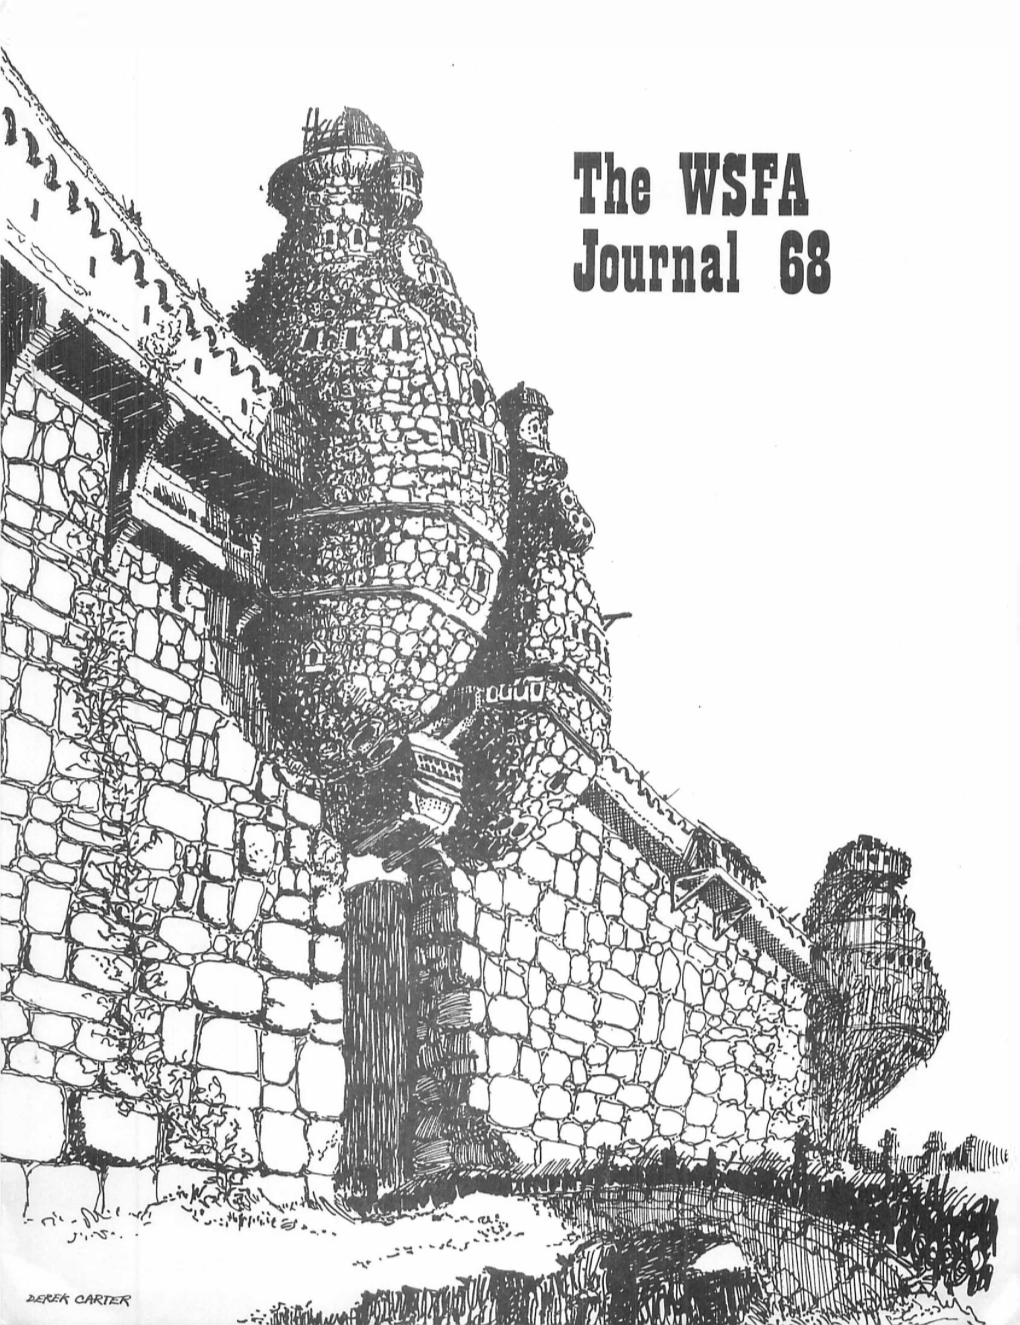 WSFA Journal 68